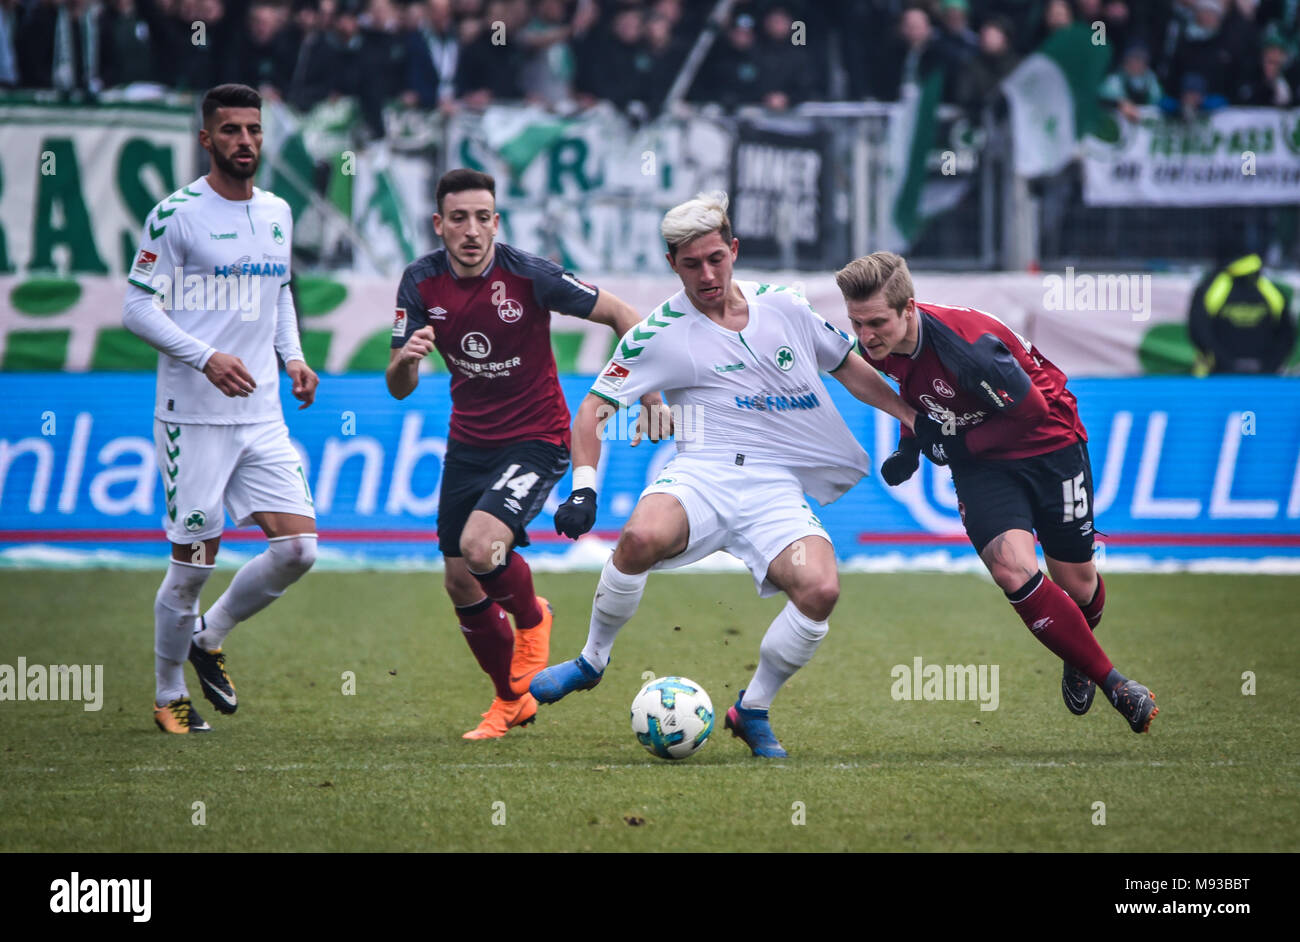 Germania, Nuernberg, Max-Morlock-Stadion, 03 marzo 2018 - 2.Bundesliga - 1.FC Nürnberg vs. SpVgg Greuther Fürth - 264° Franken Derby ! Foto Stock